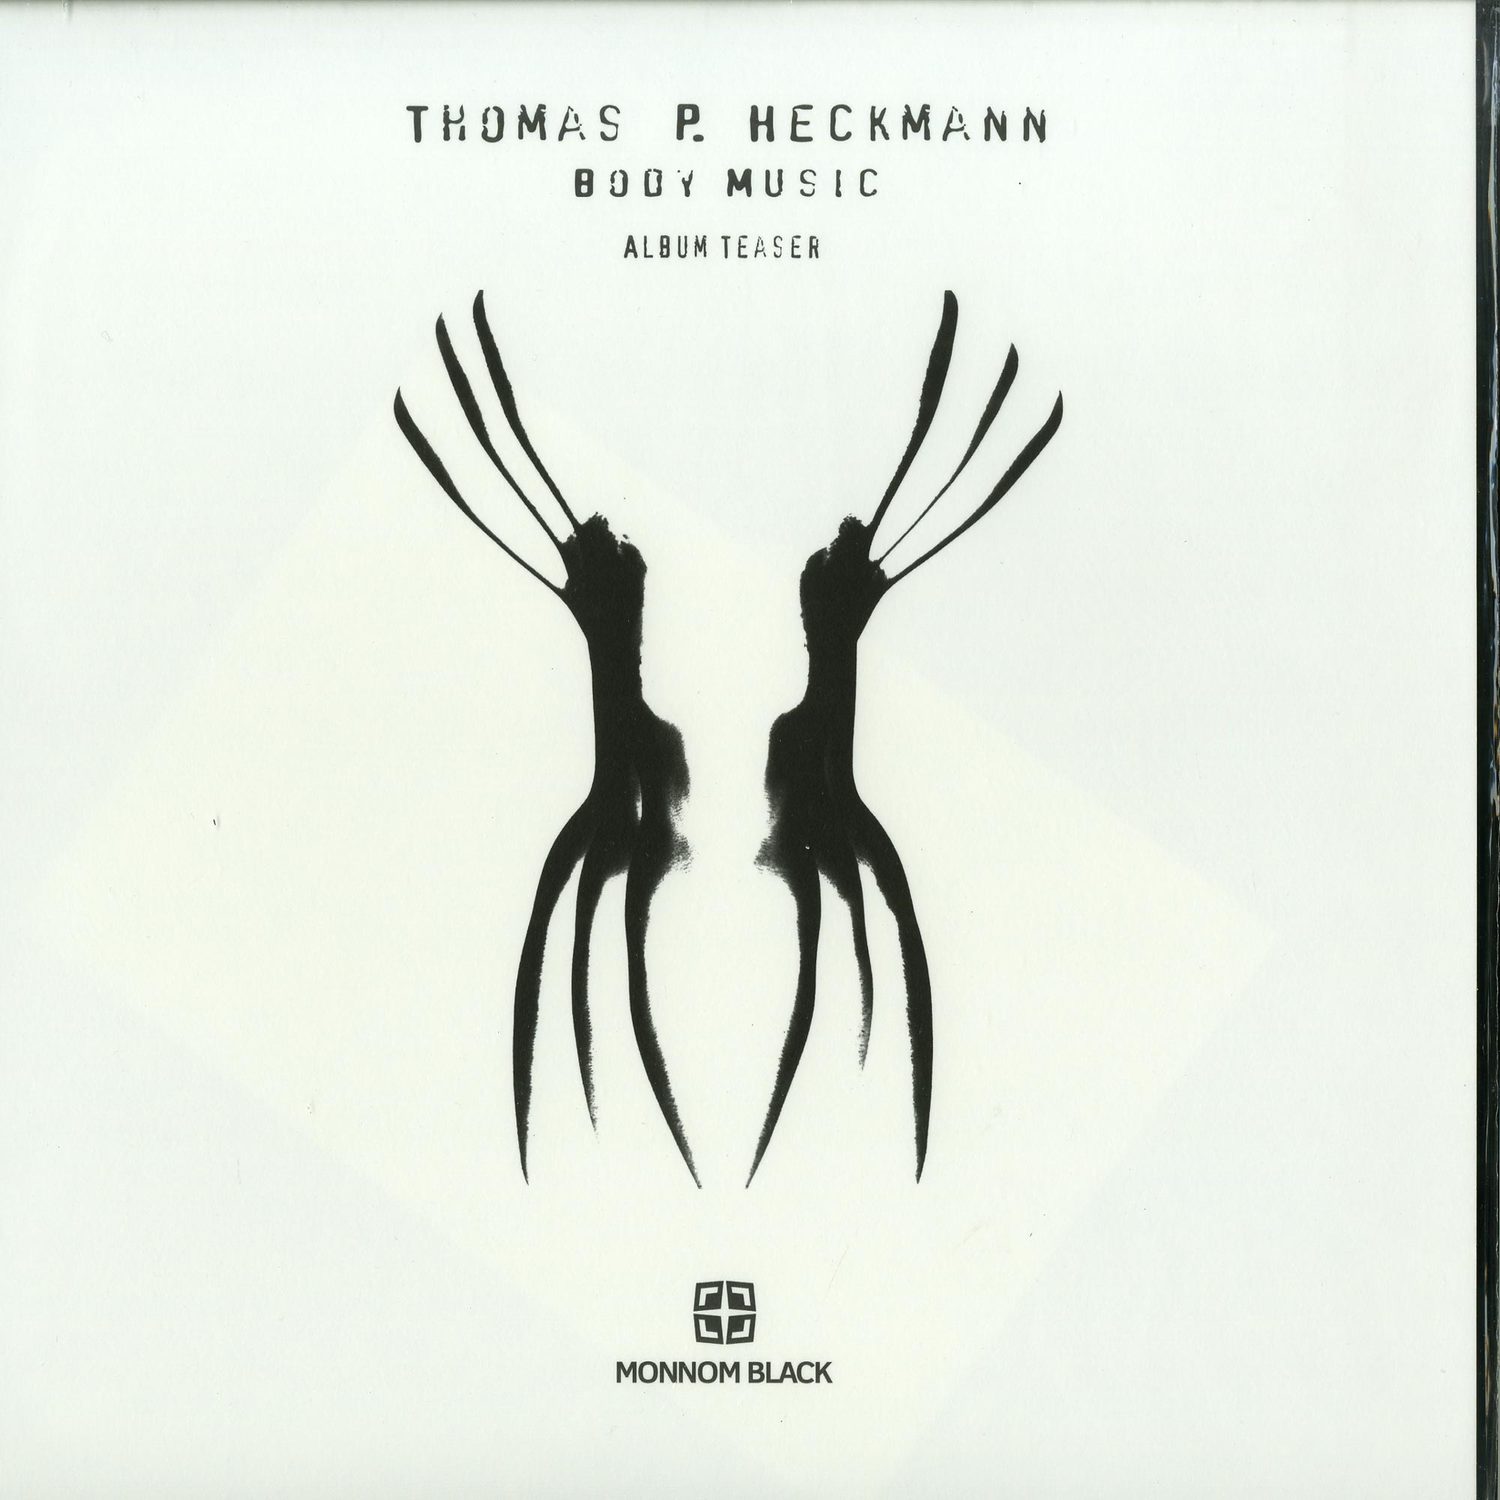 Thomas P. Heckmann - BODY MUSIC - ALBUM TEASER